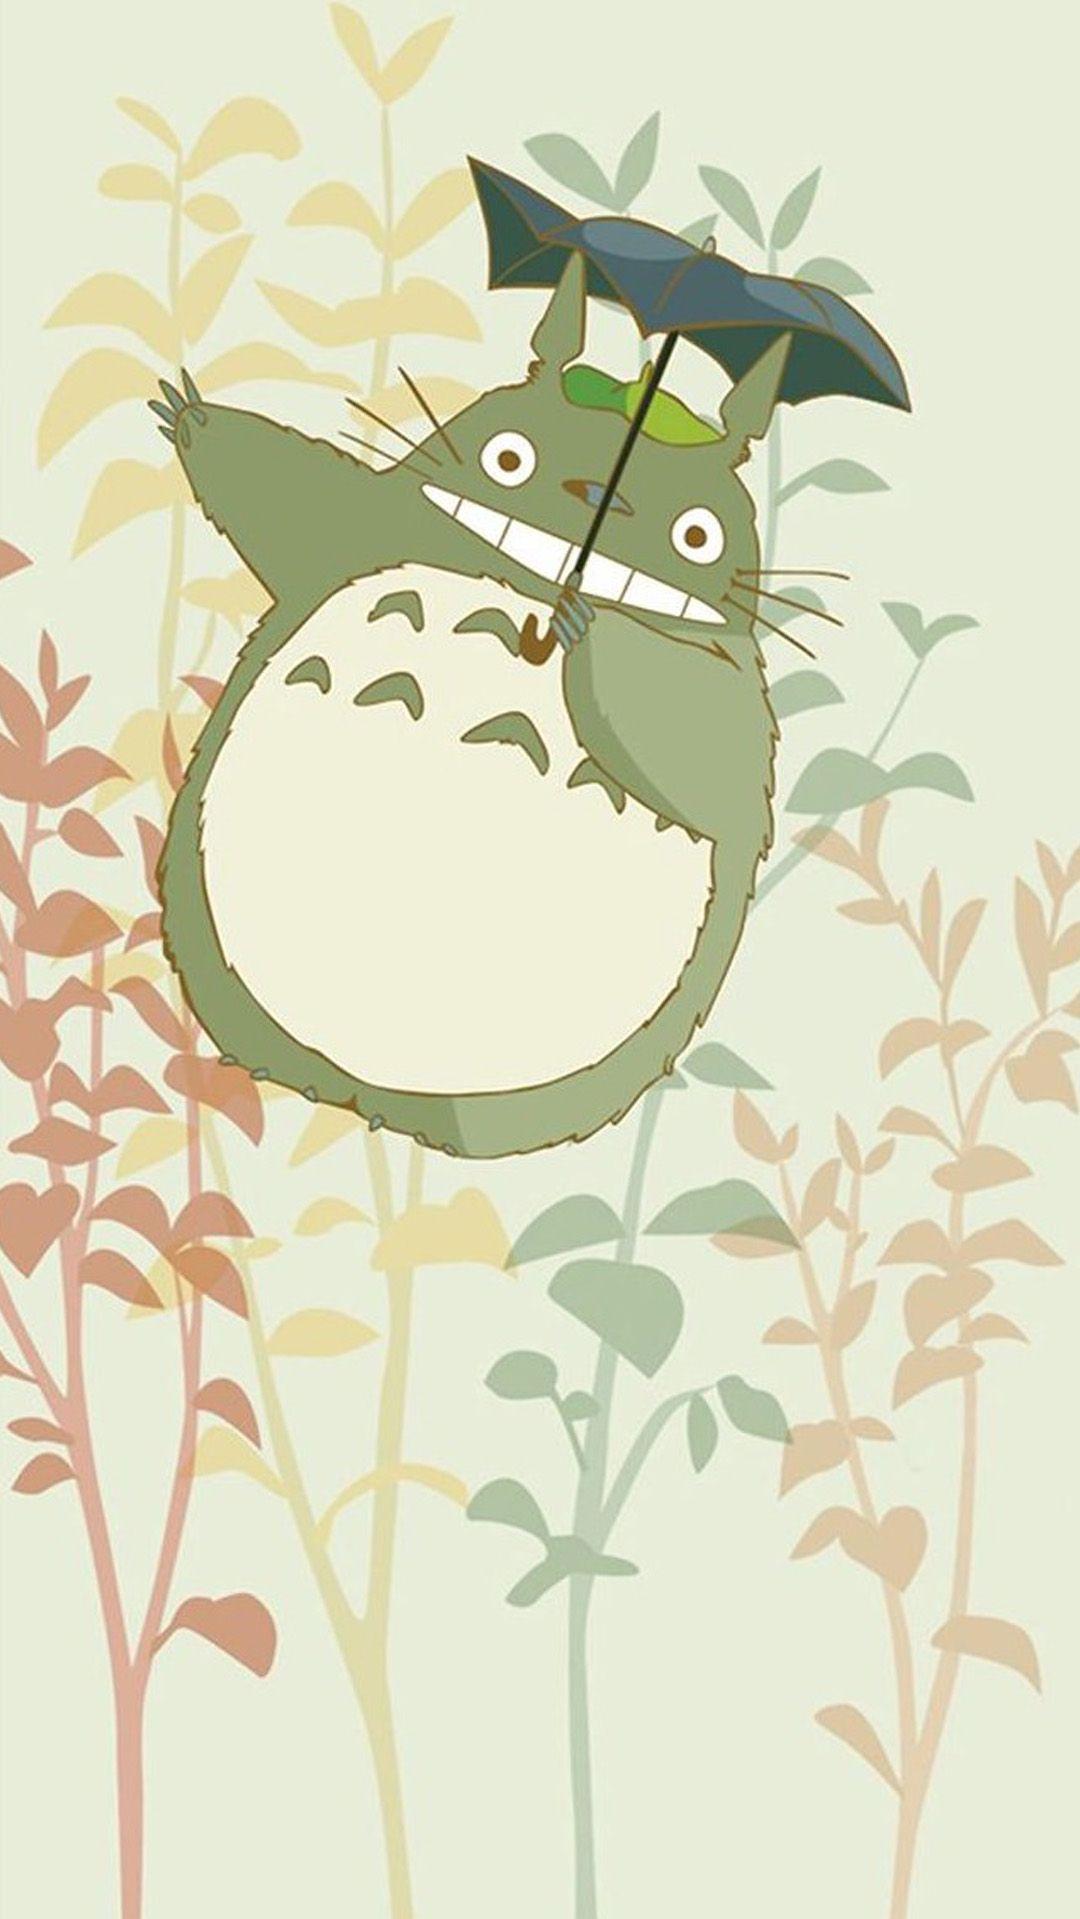 Cute My Neighbor Totoro iPhone Wallpaper Download iPhone